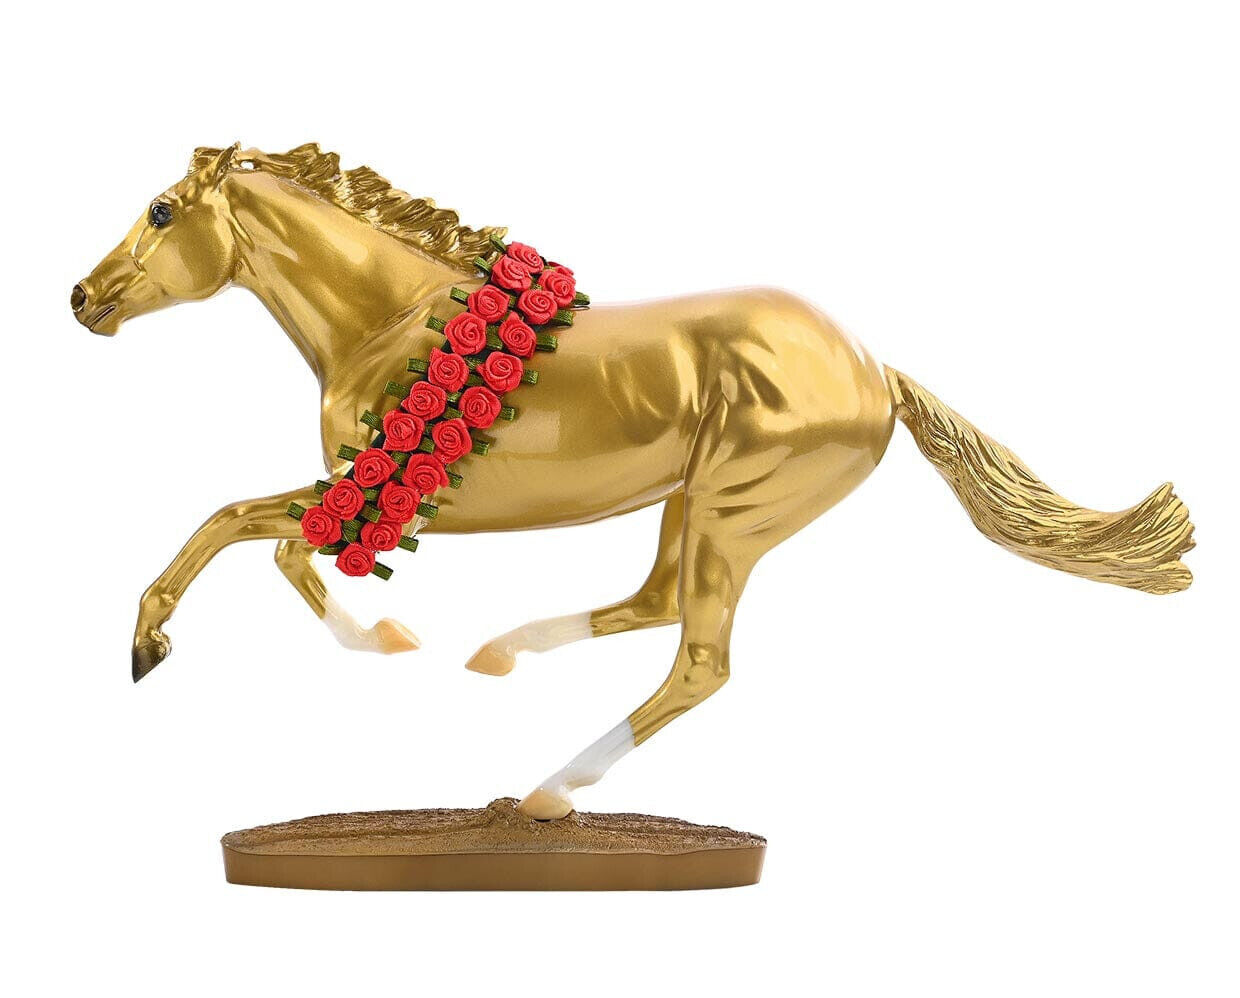 BREYER SECRETARIAT 50TH, GLOSSY TRIPLE CROWN WINNER GOLD RACEHORSE, ROSE GARLAND